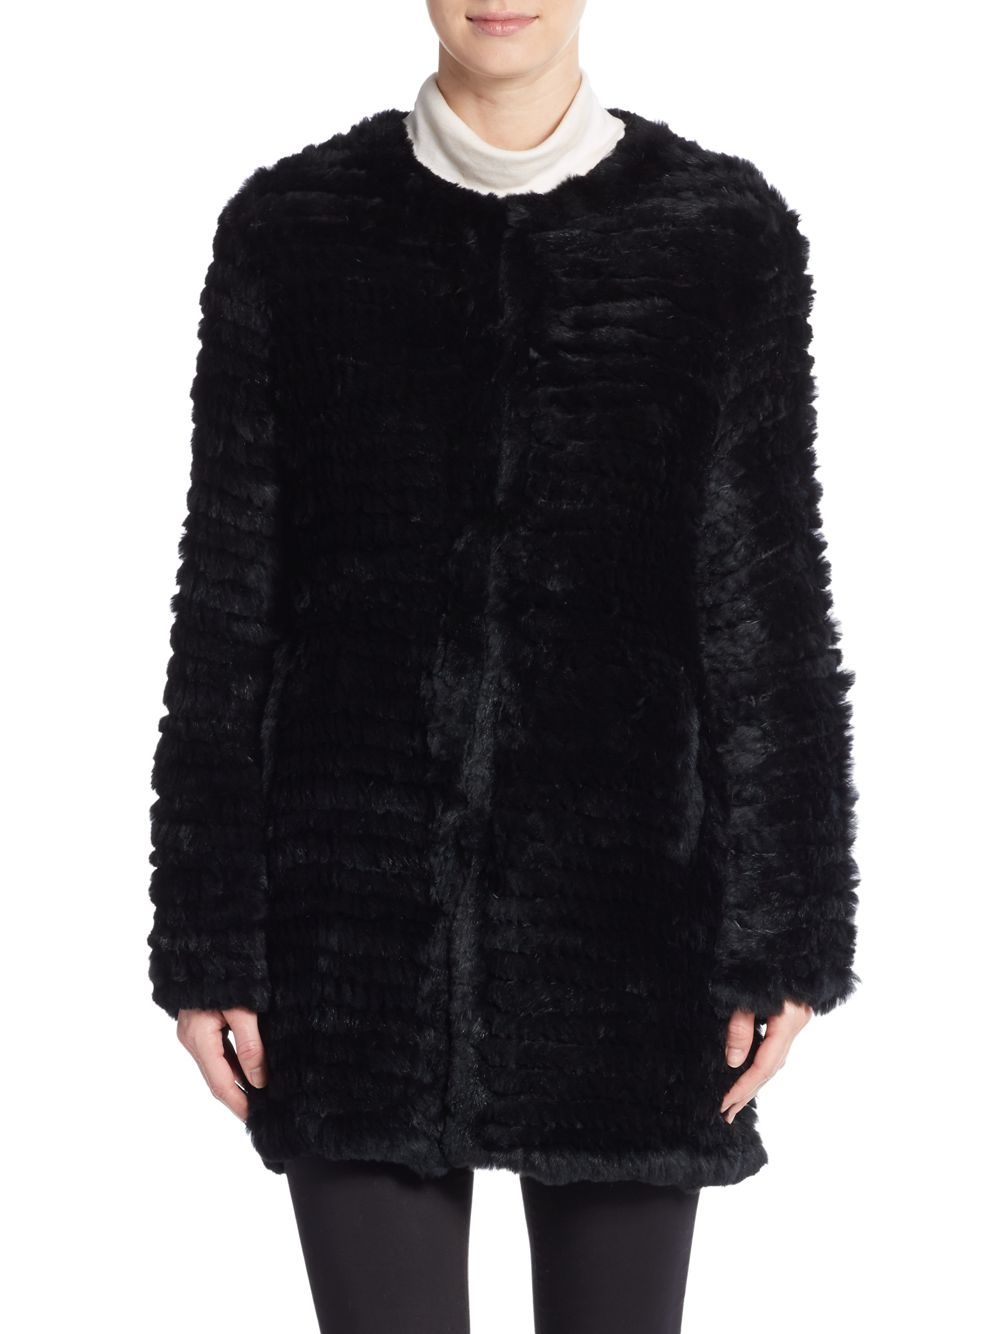 Adrienne landau Knit Rabbit Fur Coat in Black | Lyst